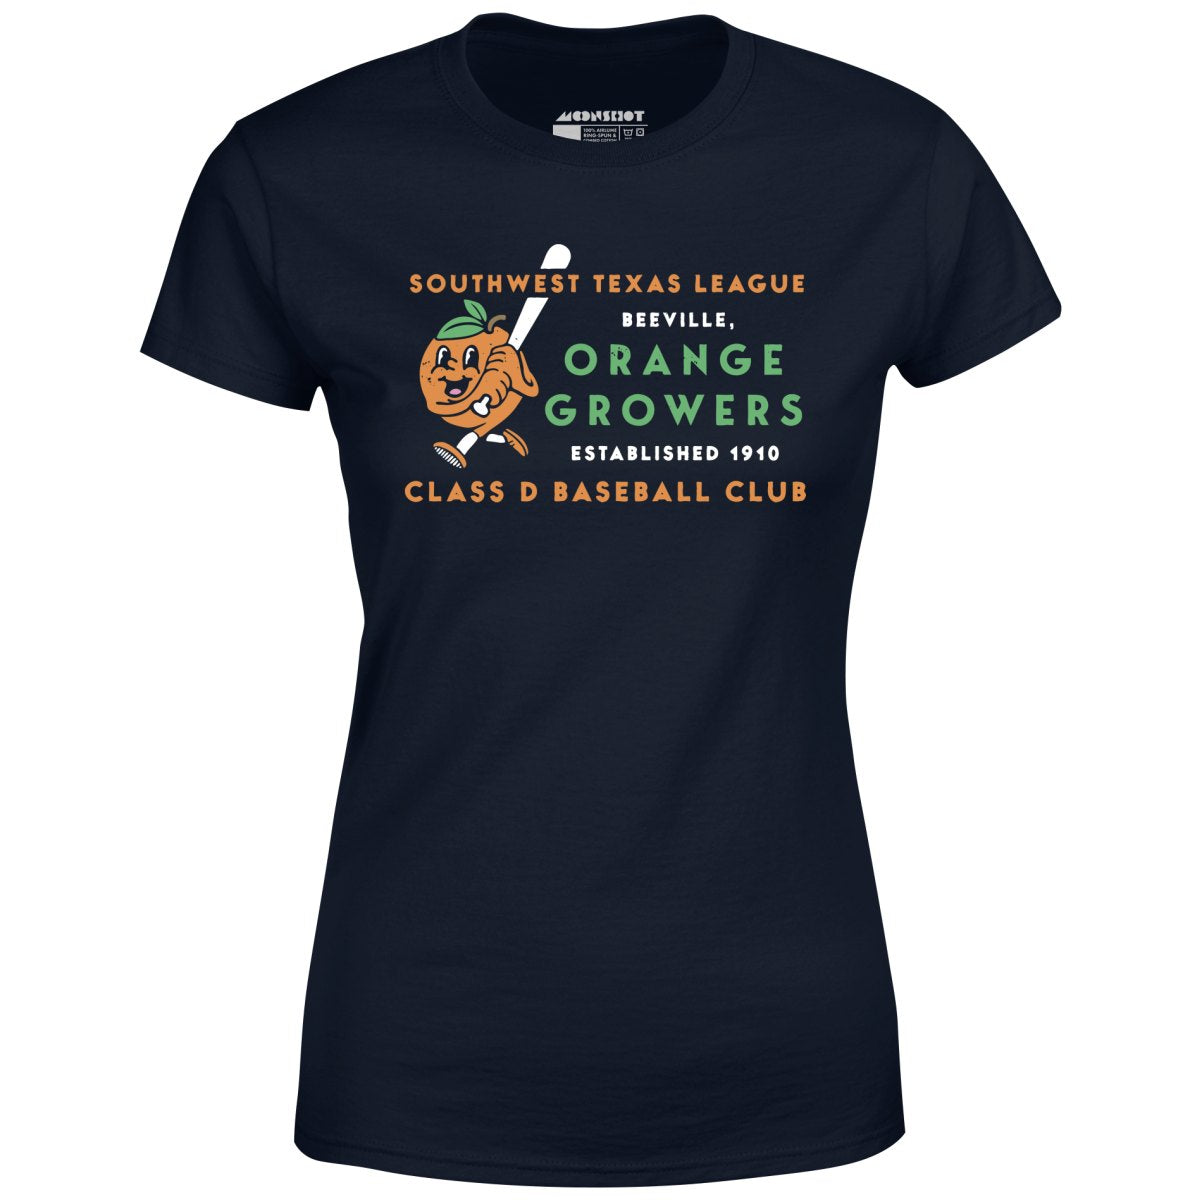 Beeville Orange Growers - Texas - Vintage Defunct Baseball Teams - Women's T-Shirt